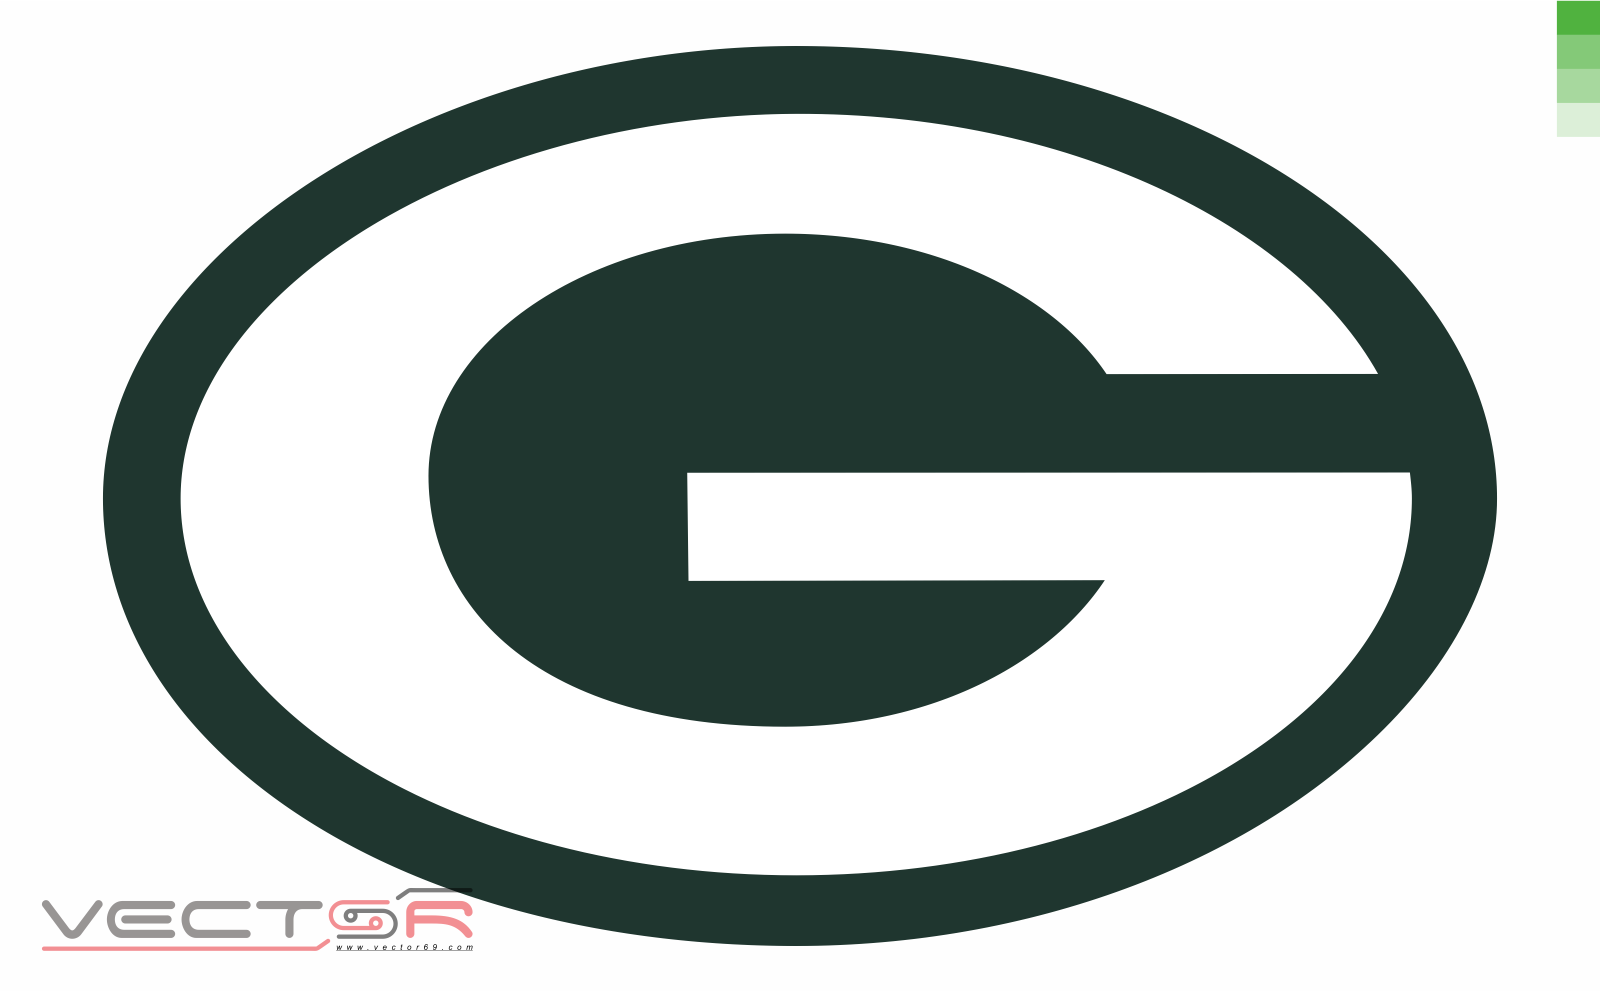 Green Bay Packers 1961-1979 Logo - Download Vector File CDR (CorelDraw)